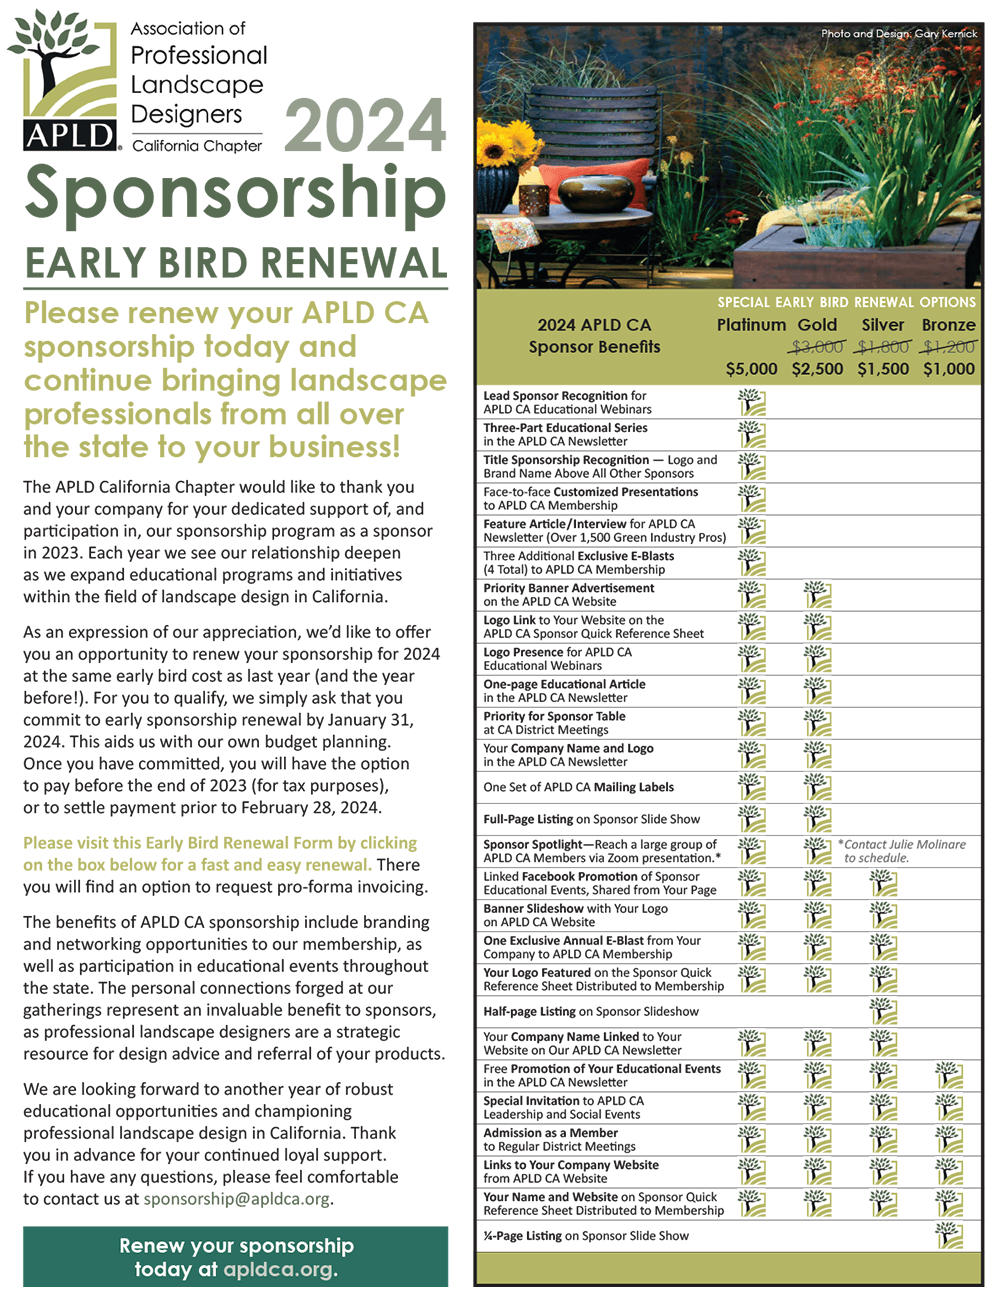 APLD-CA 2024 Sponsorship Campaign: Renewing Sponsor Benefits